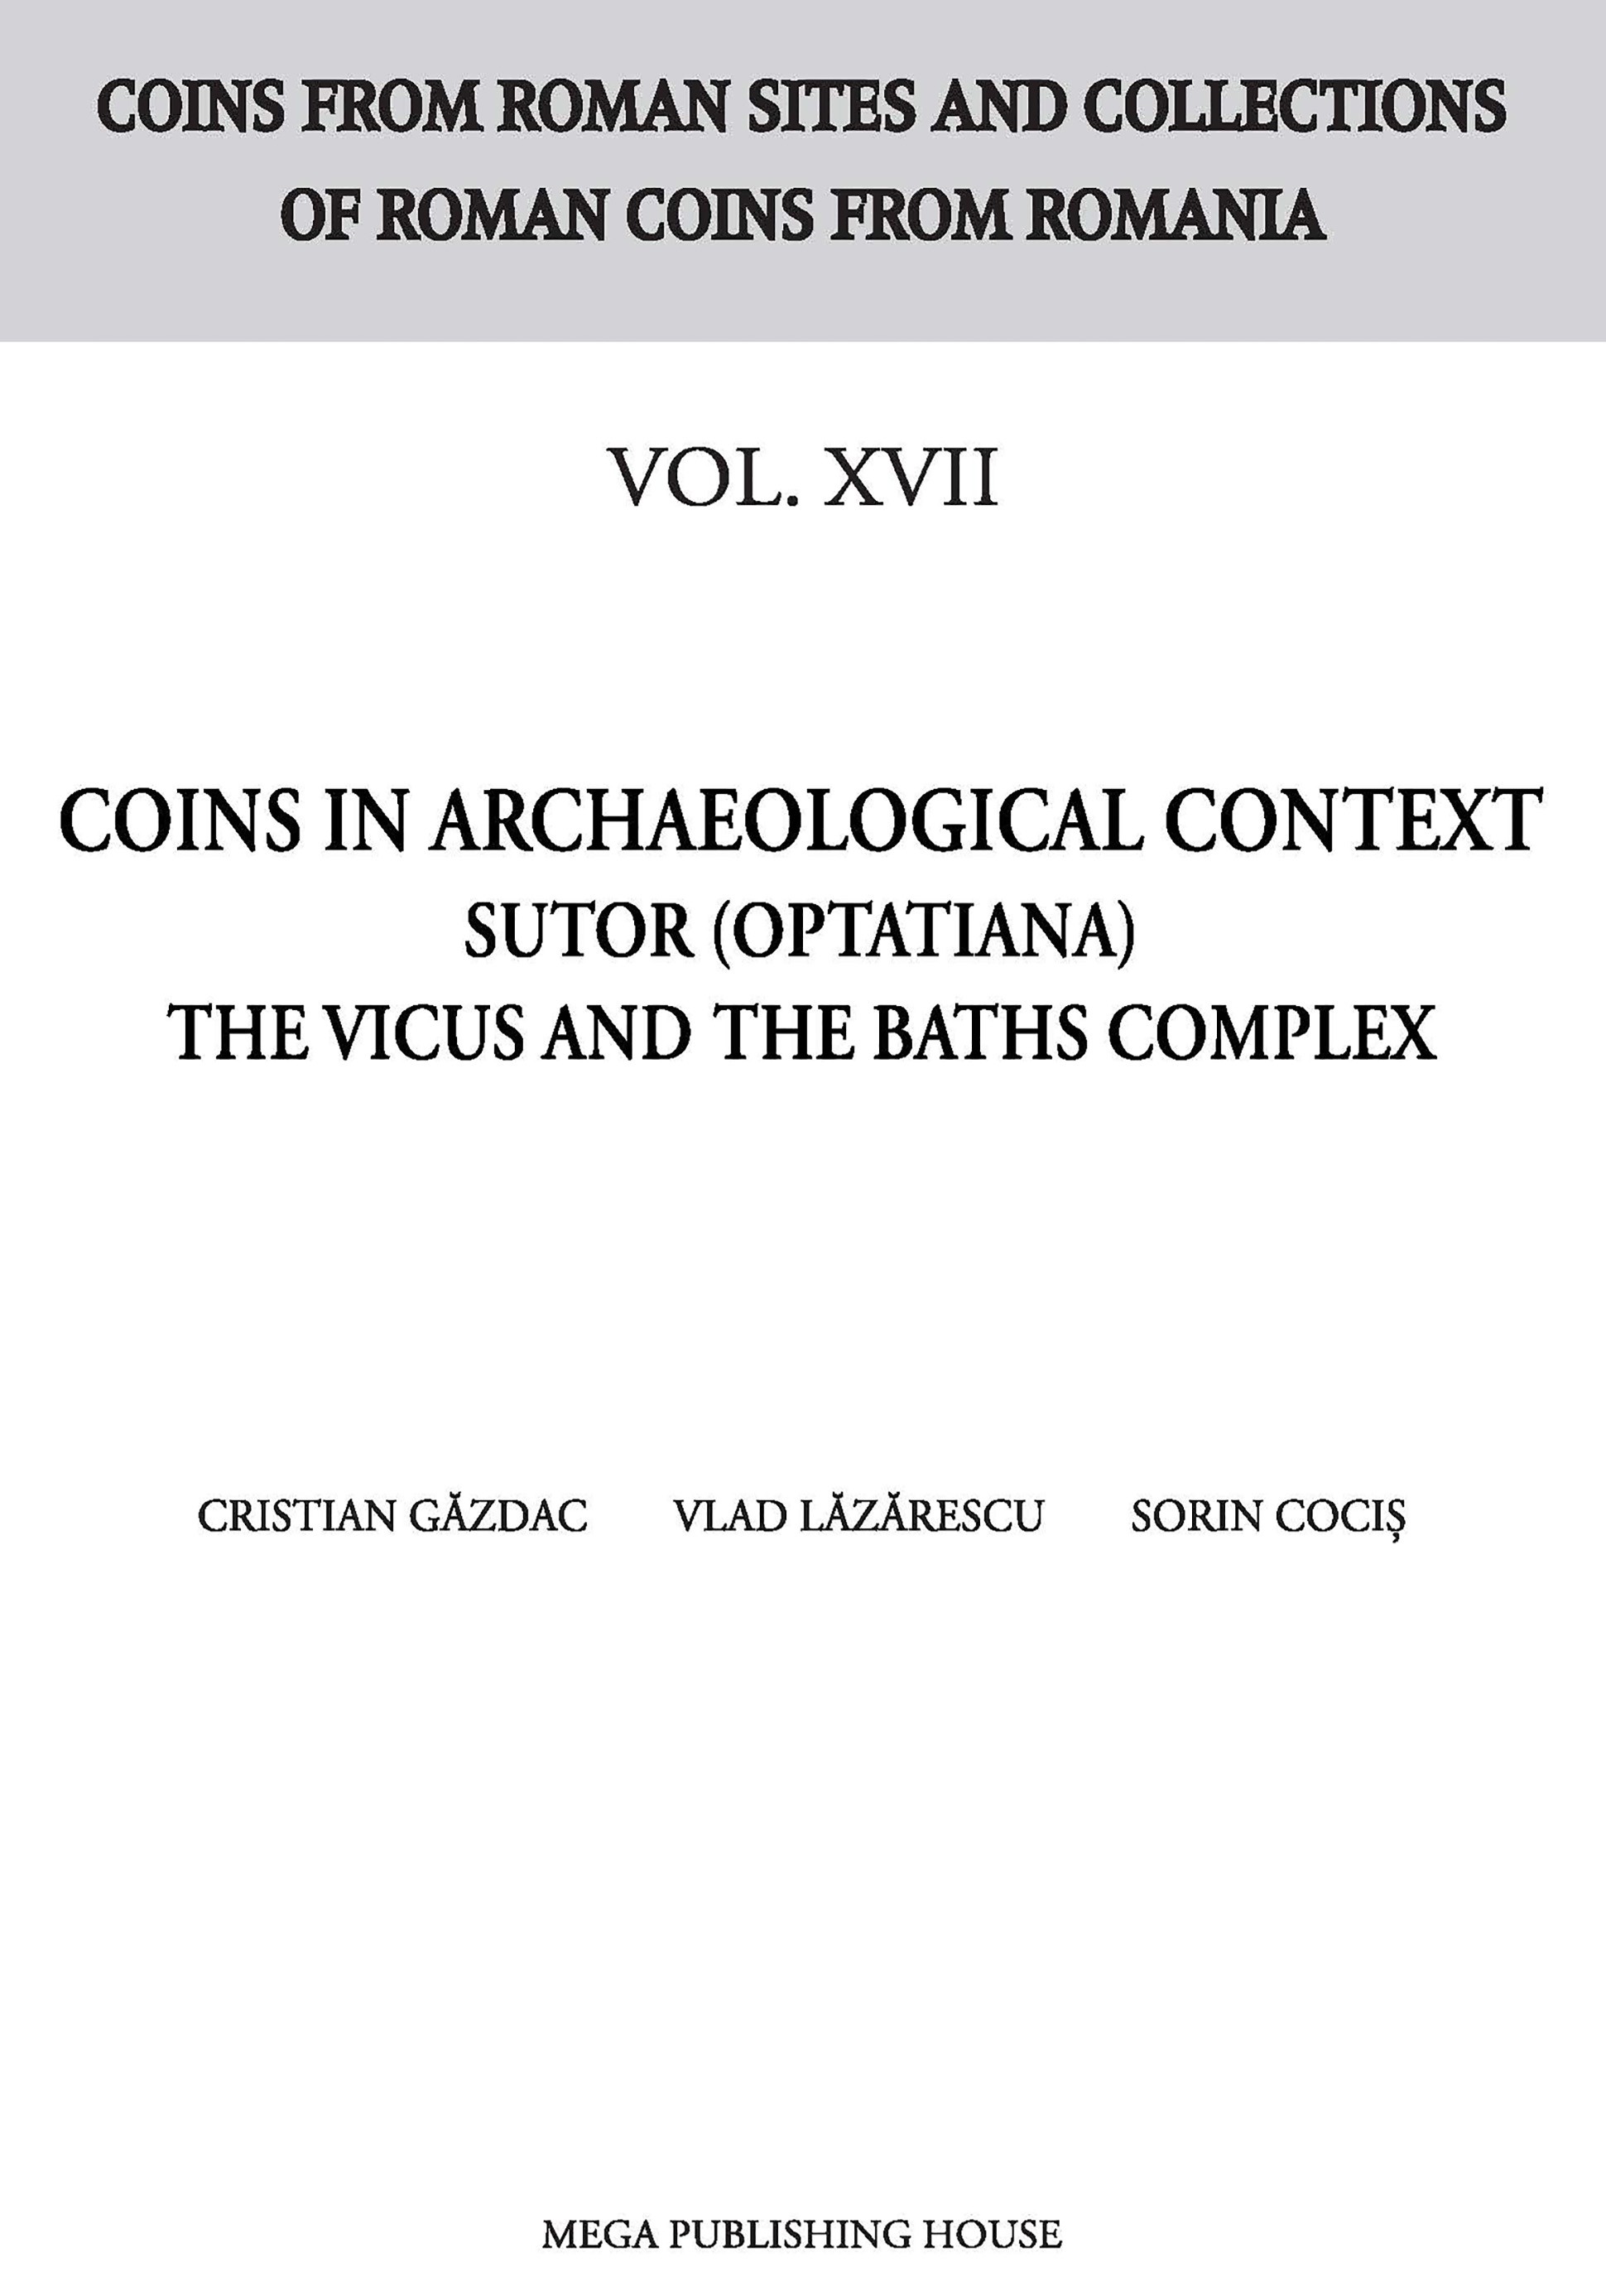 Găzdac, Cristian – Vlad Lăzărescu – Sorin Cociş : Coins in archaeological context. Sutor (Optiana): The vicus and the baths complex